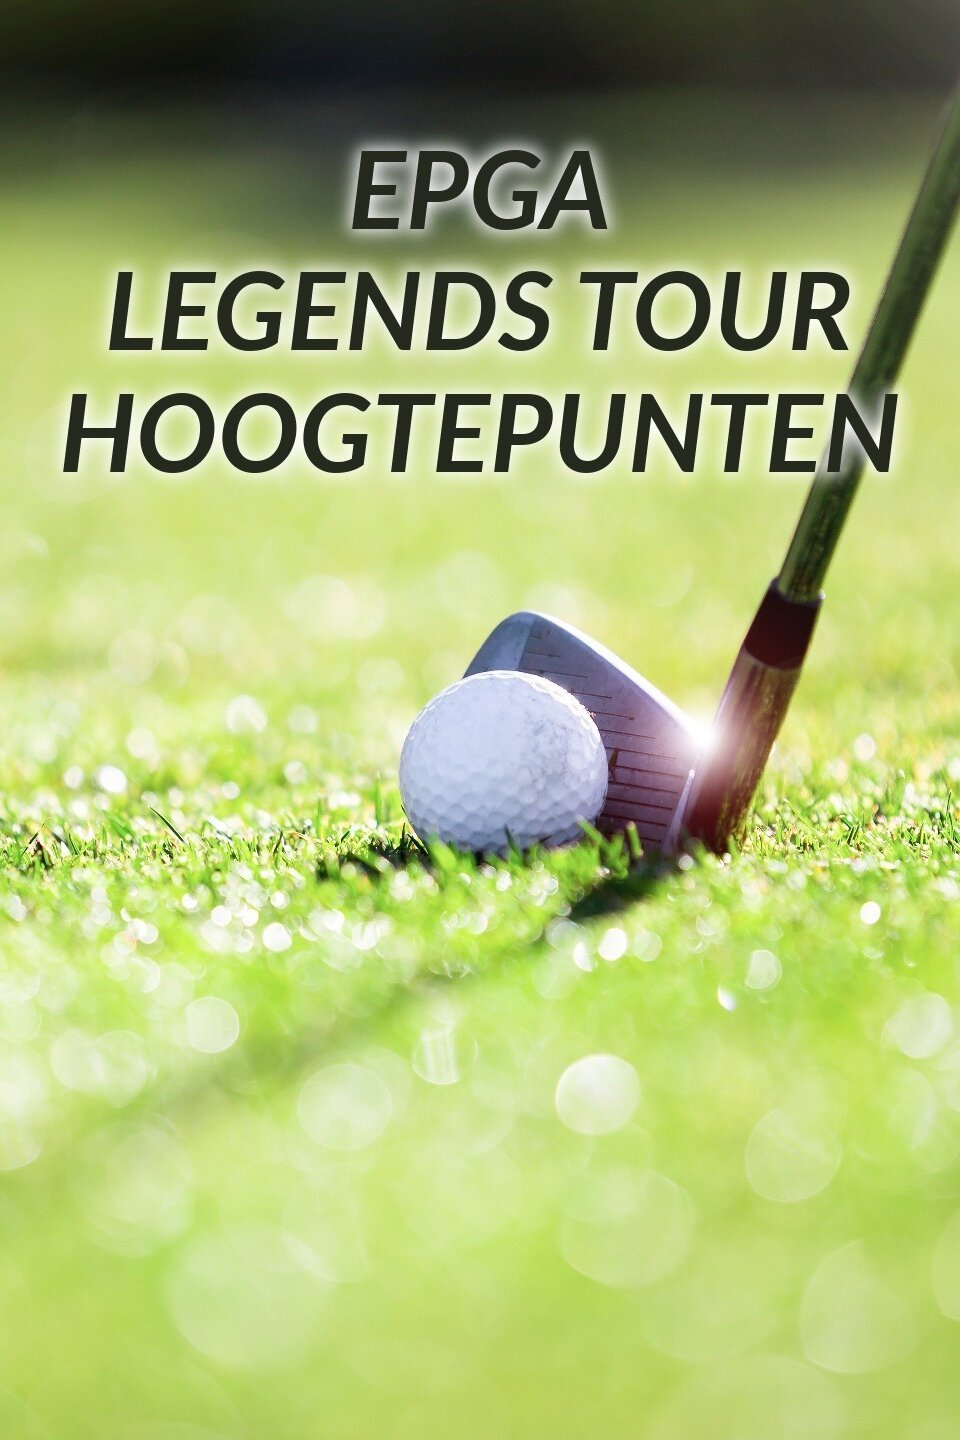 EPGA Legends Tour Hoogtepunten